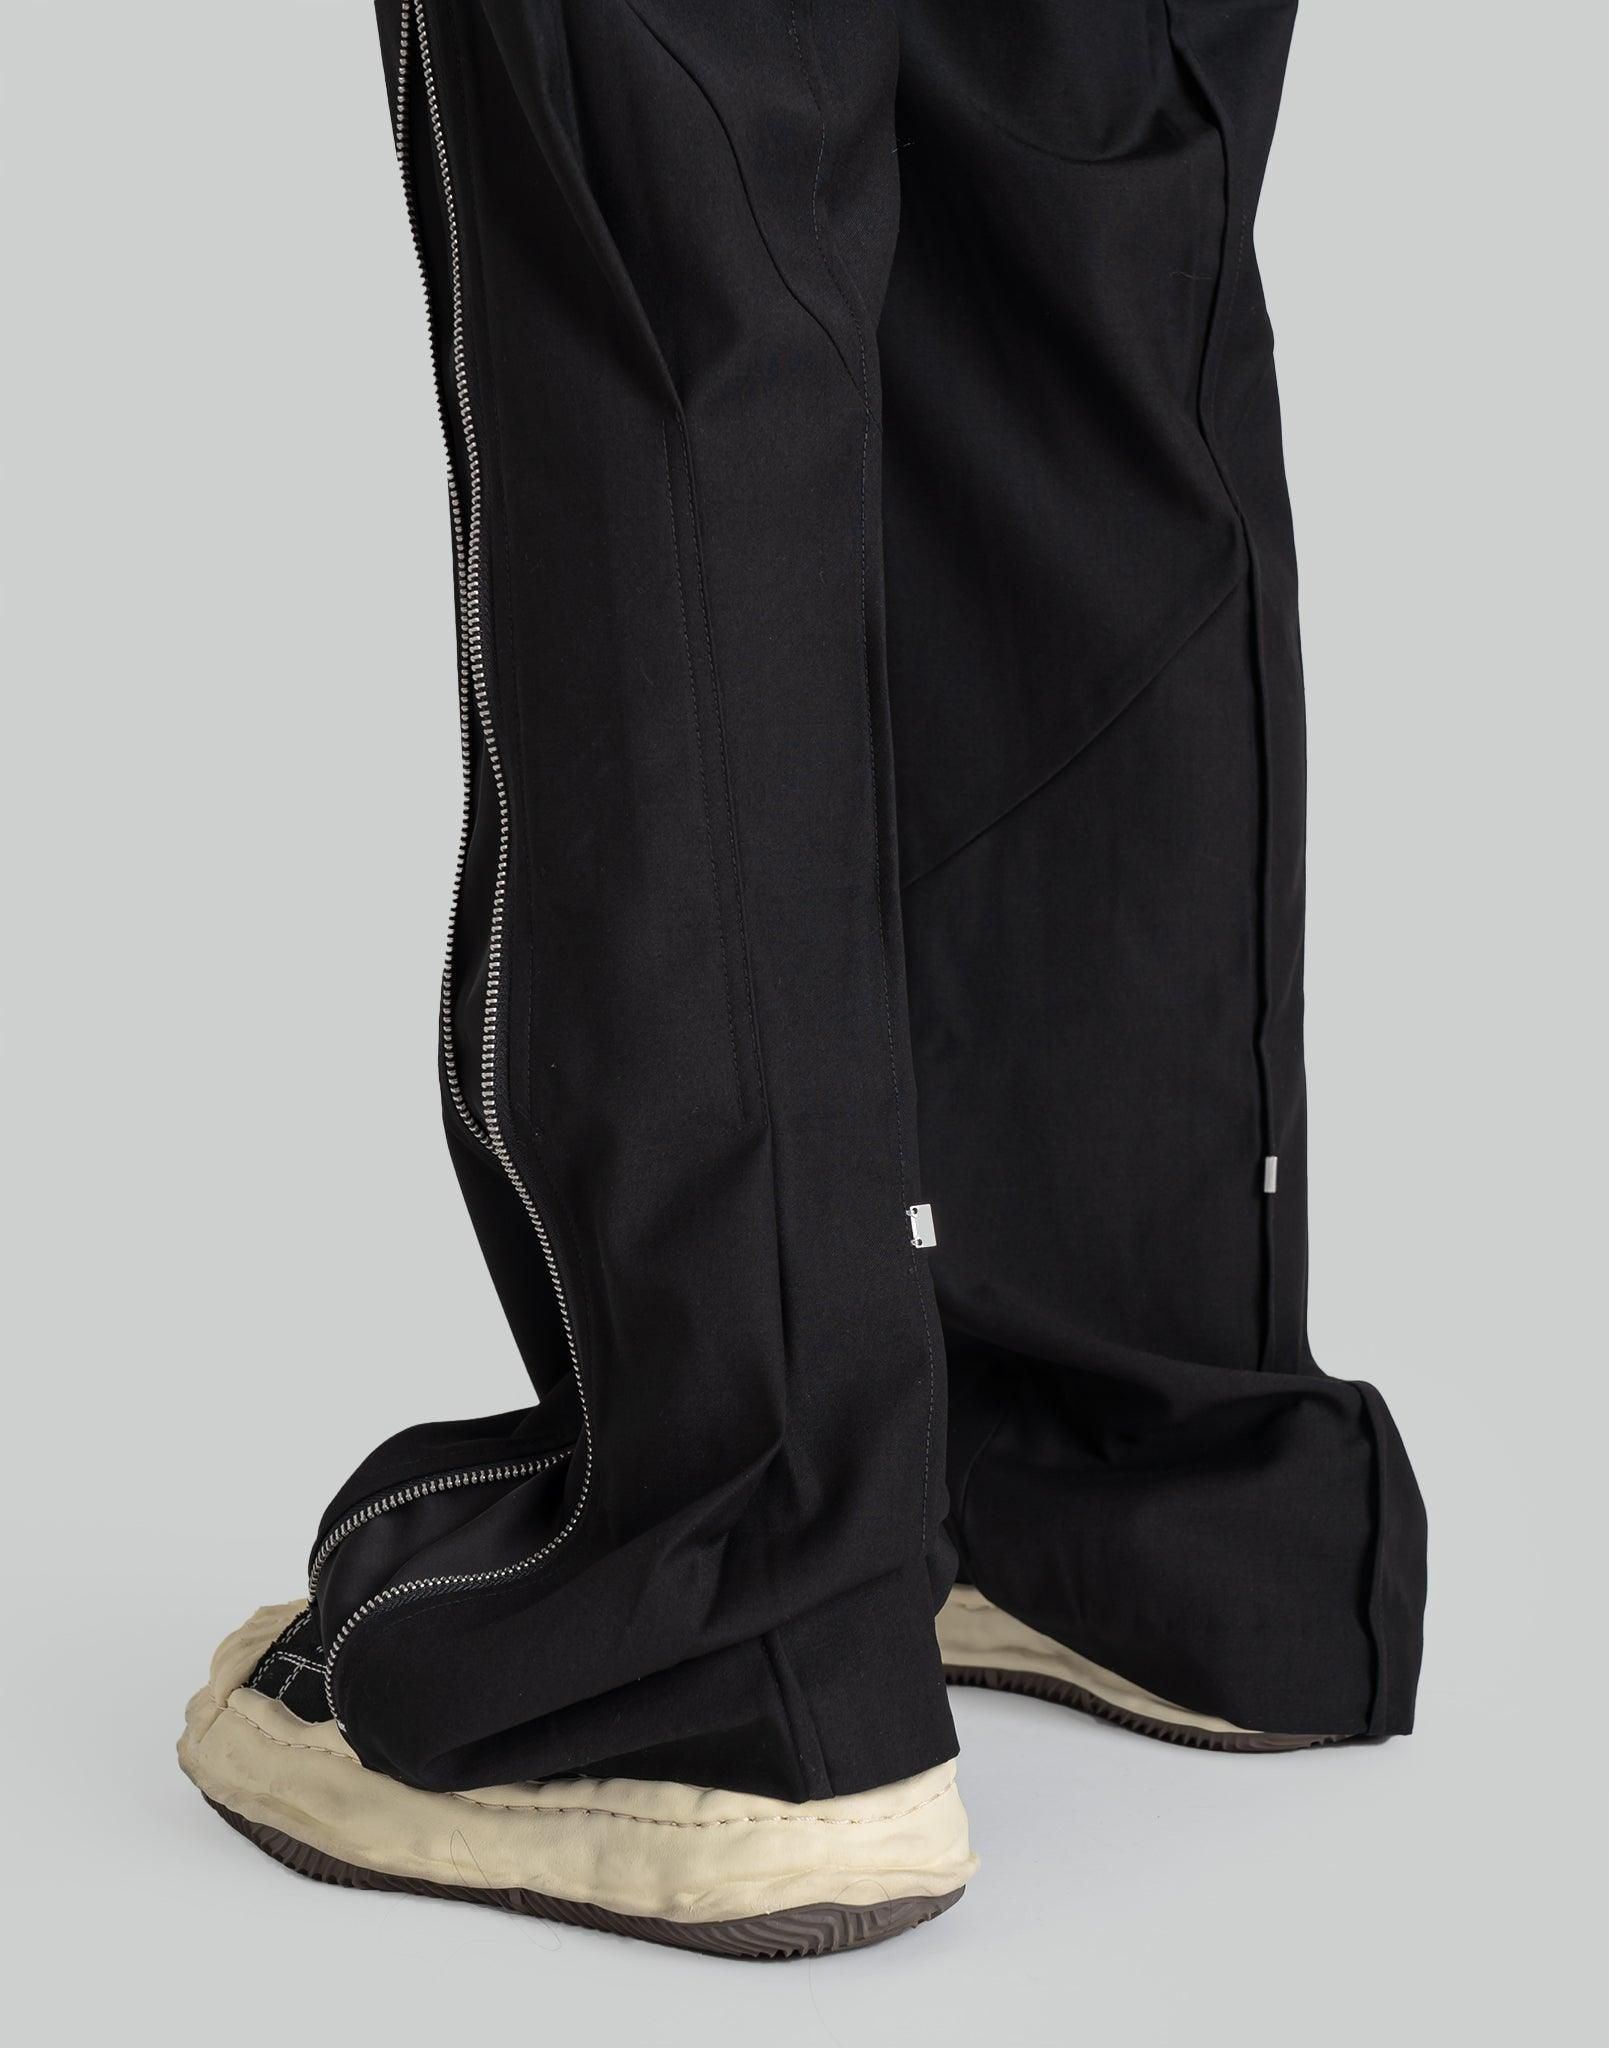 C2H4 "Hidden Luster" Zipper Tailored Trousers - 082plus